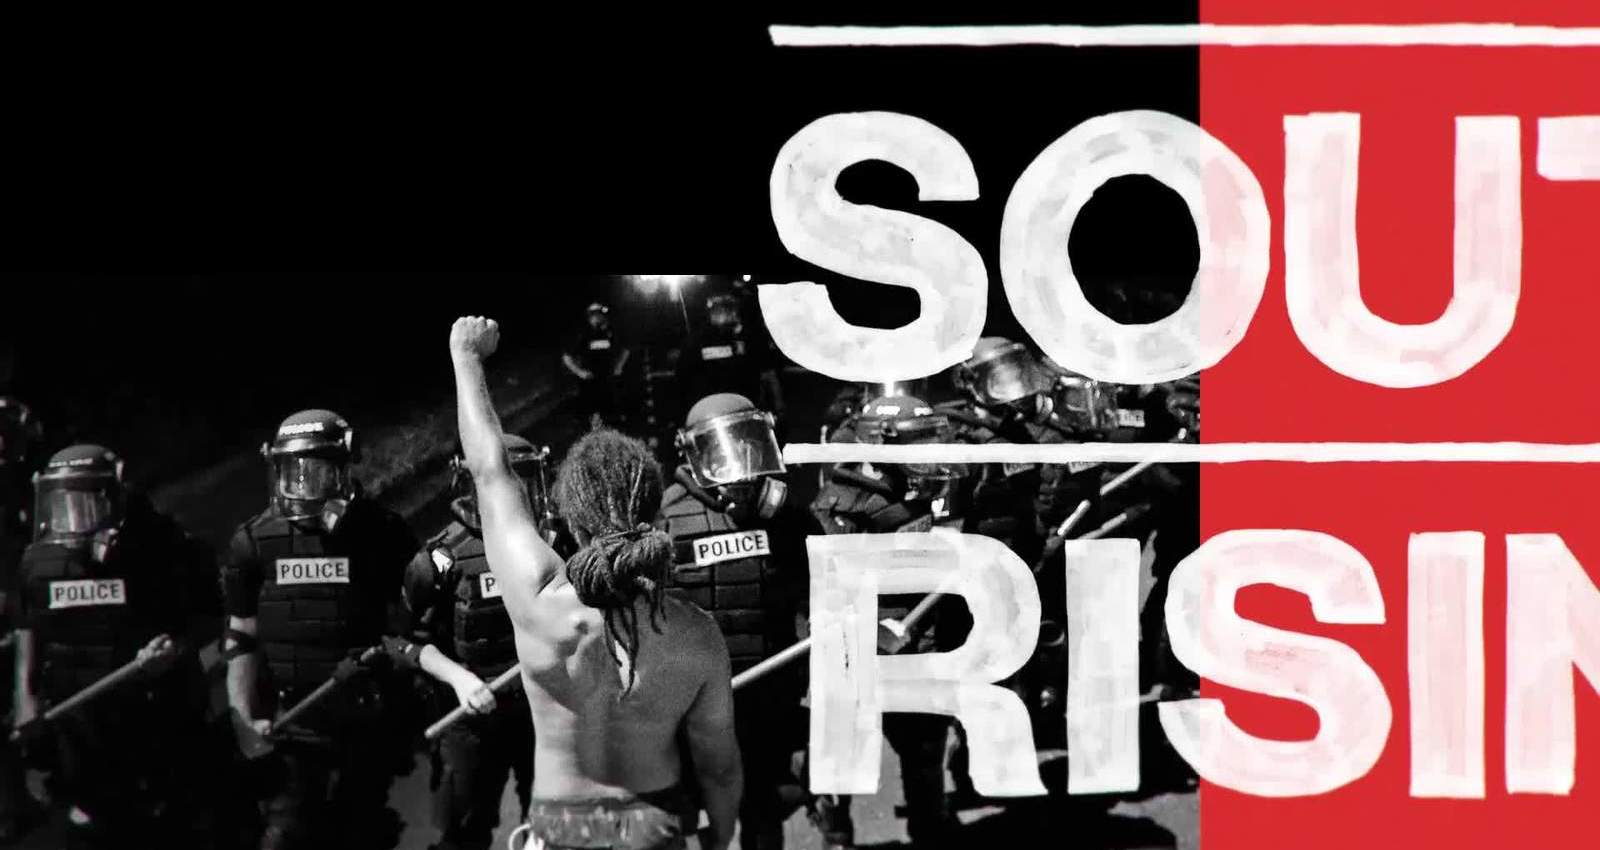 Black South Rising